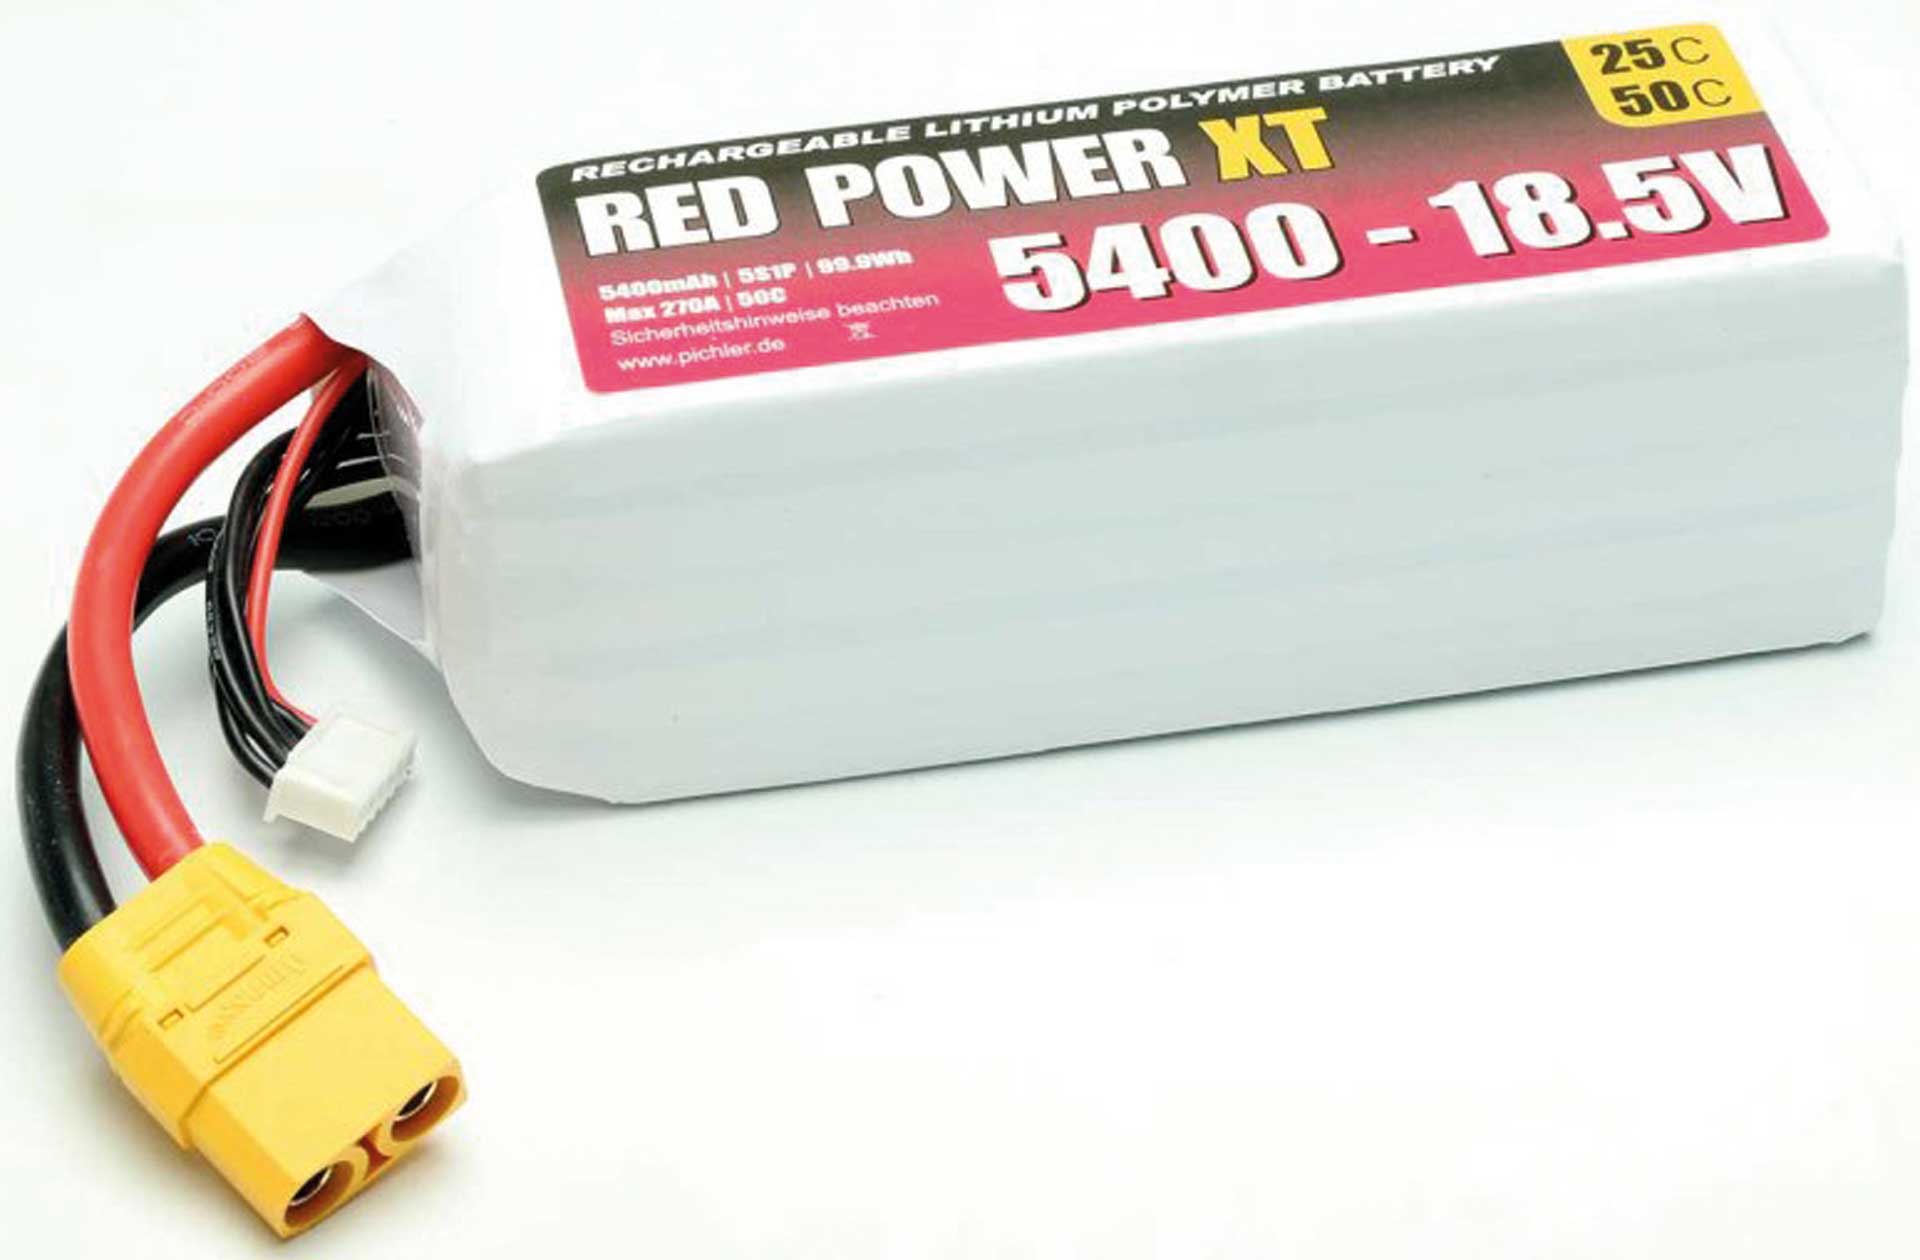 PICHLER RED POWER XT 5400 - 18,5V Lipo 5S